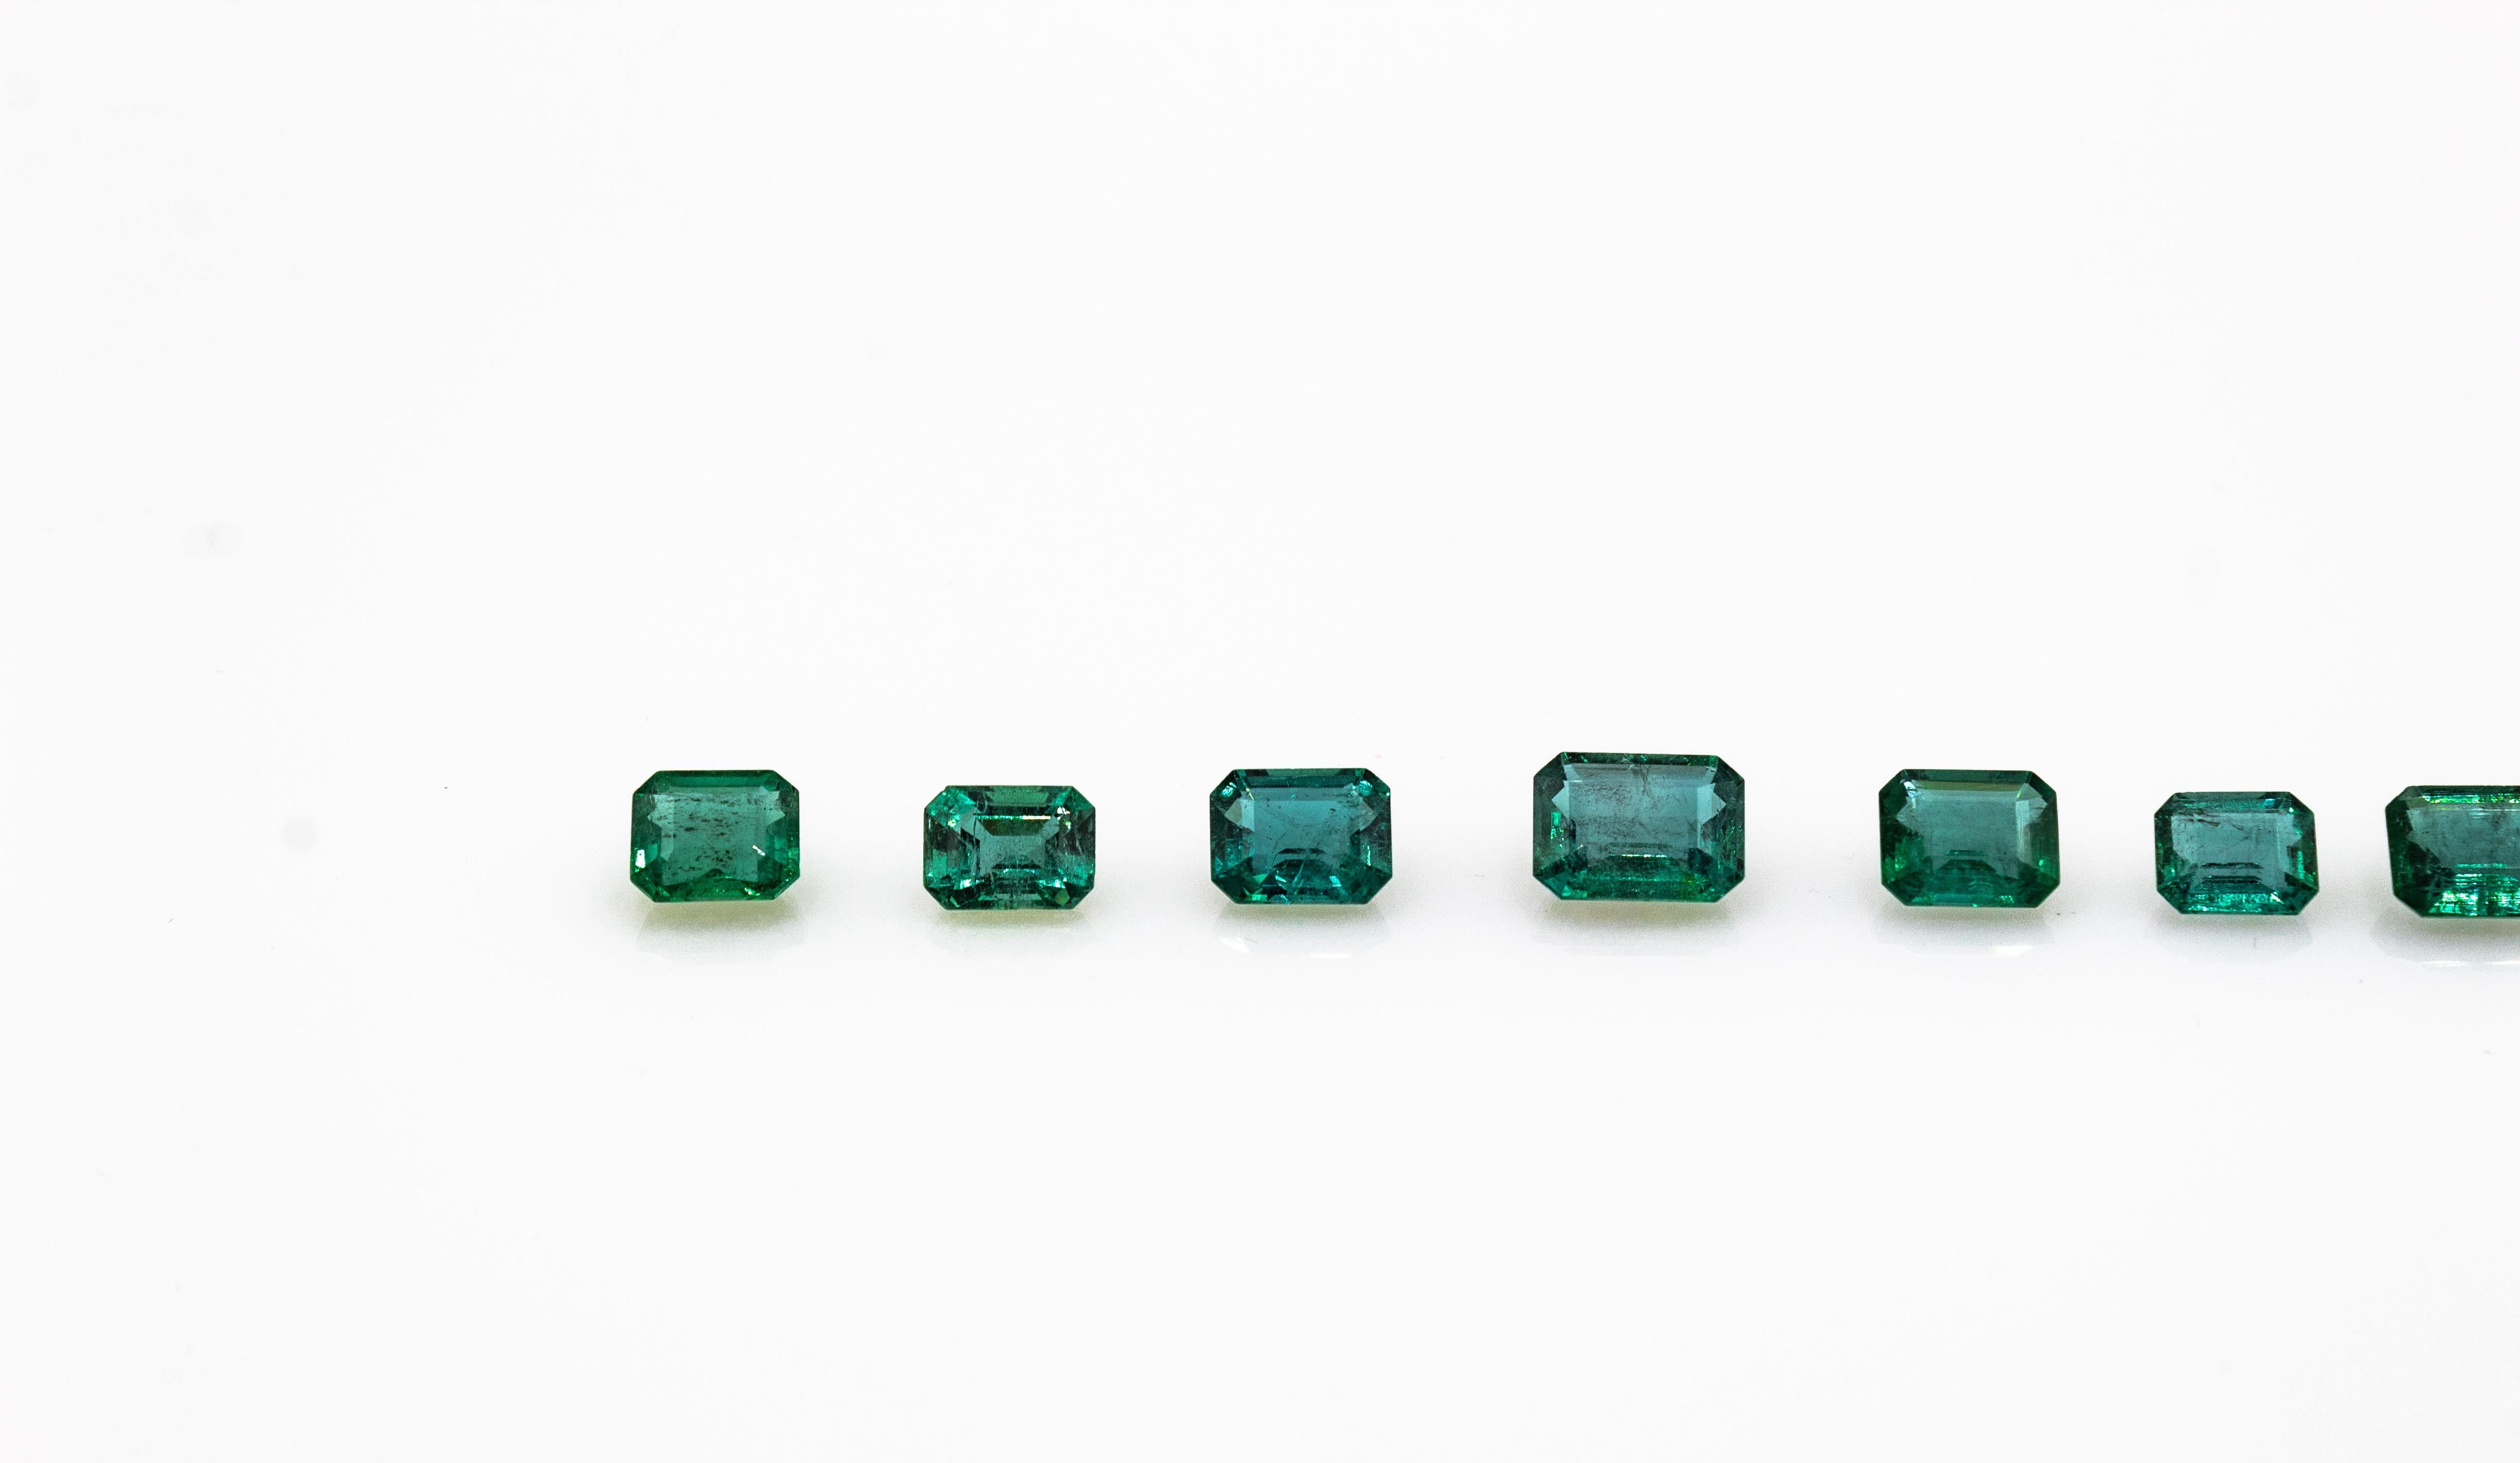 Certifiable Zambia Octagon Cut 2.98 Carat Emerald Loose Gemstone 2